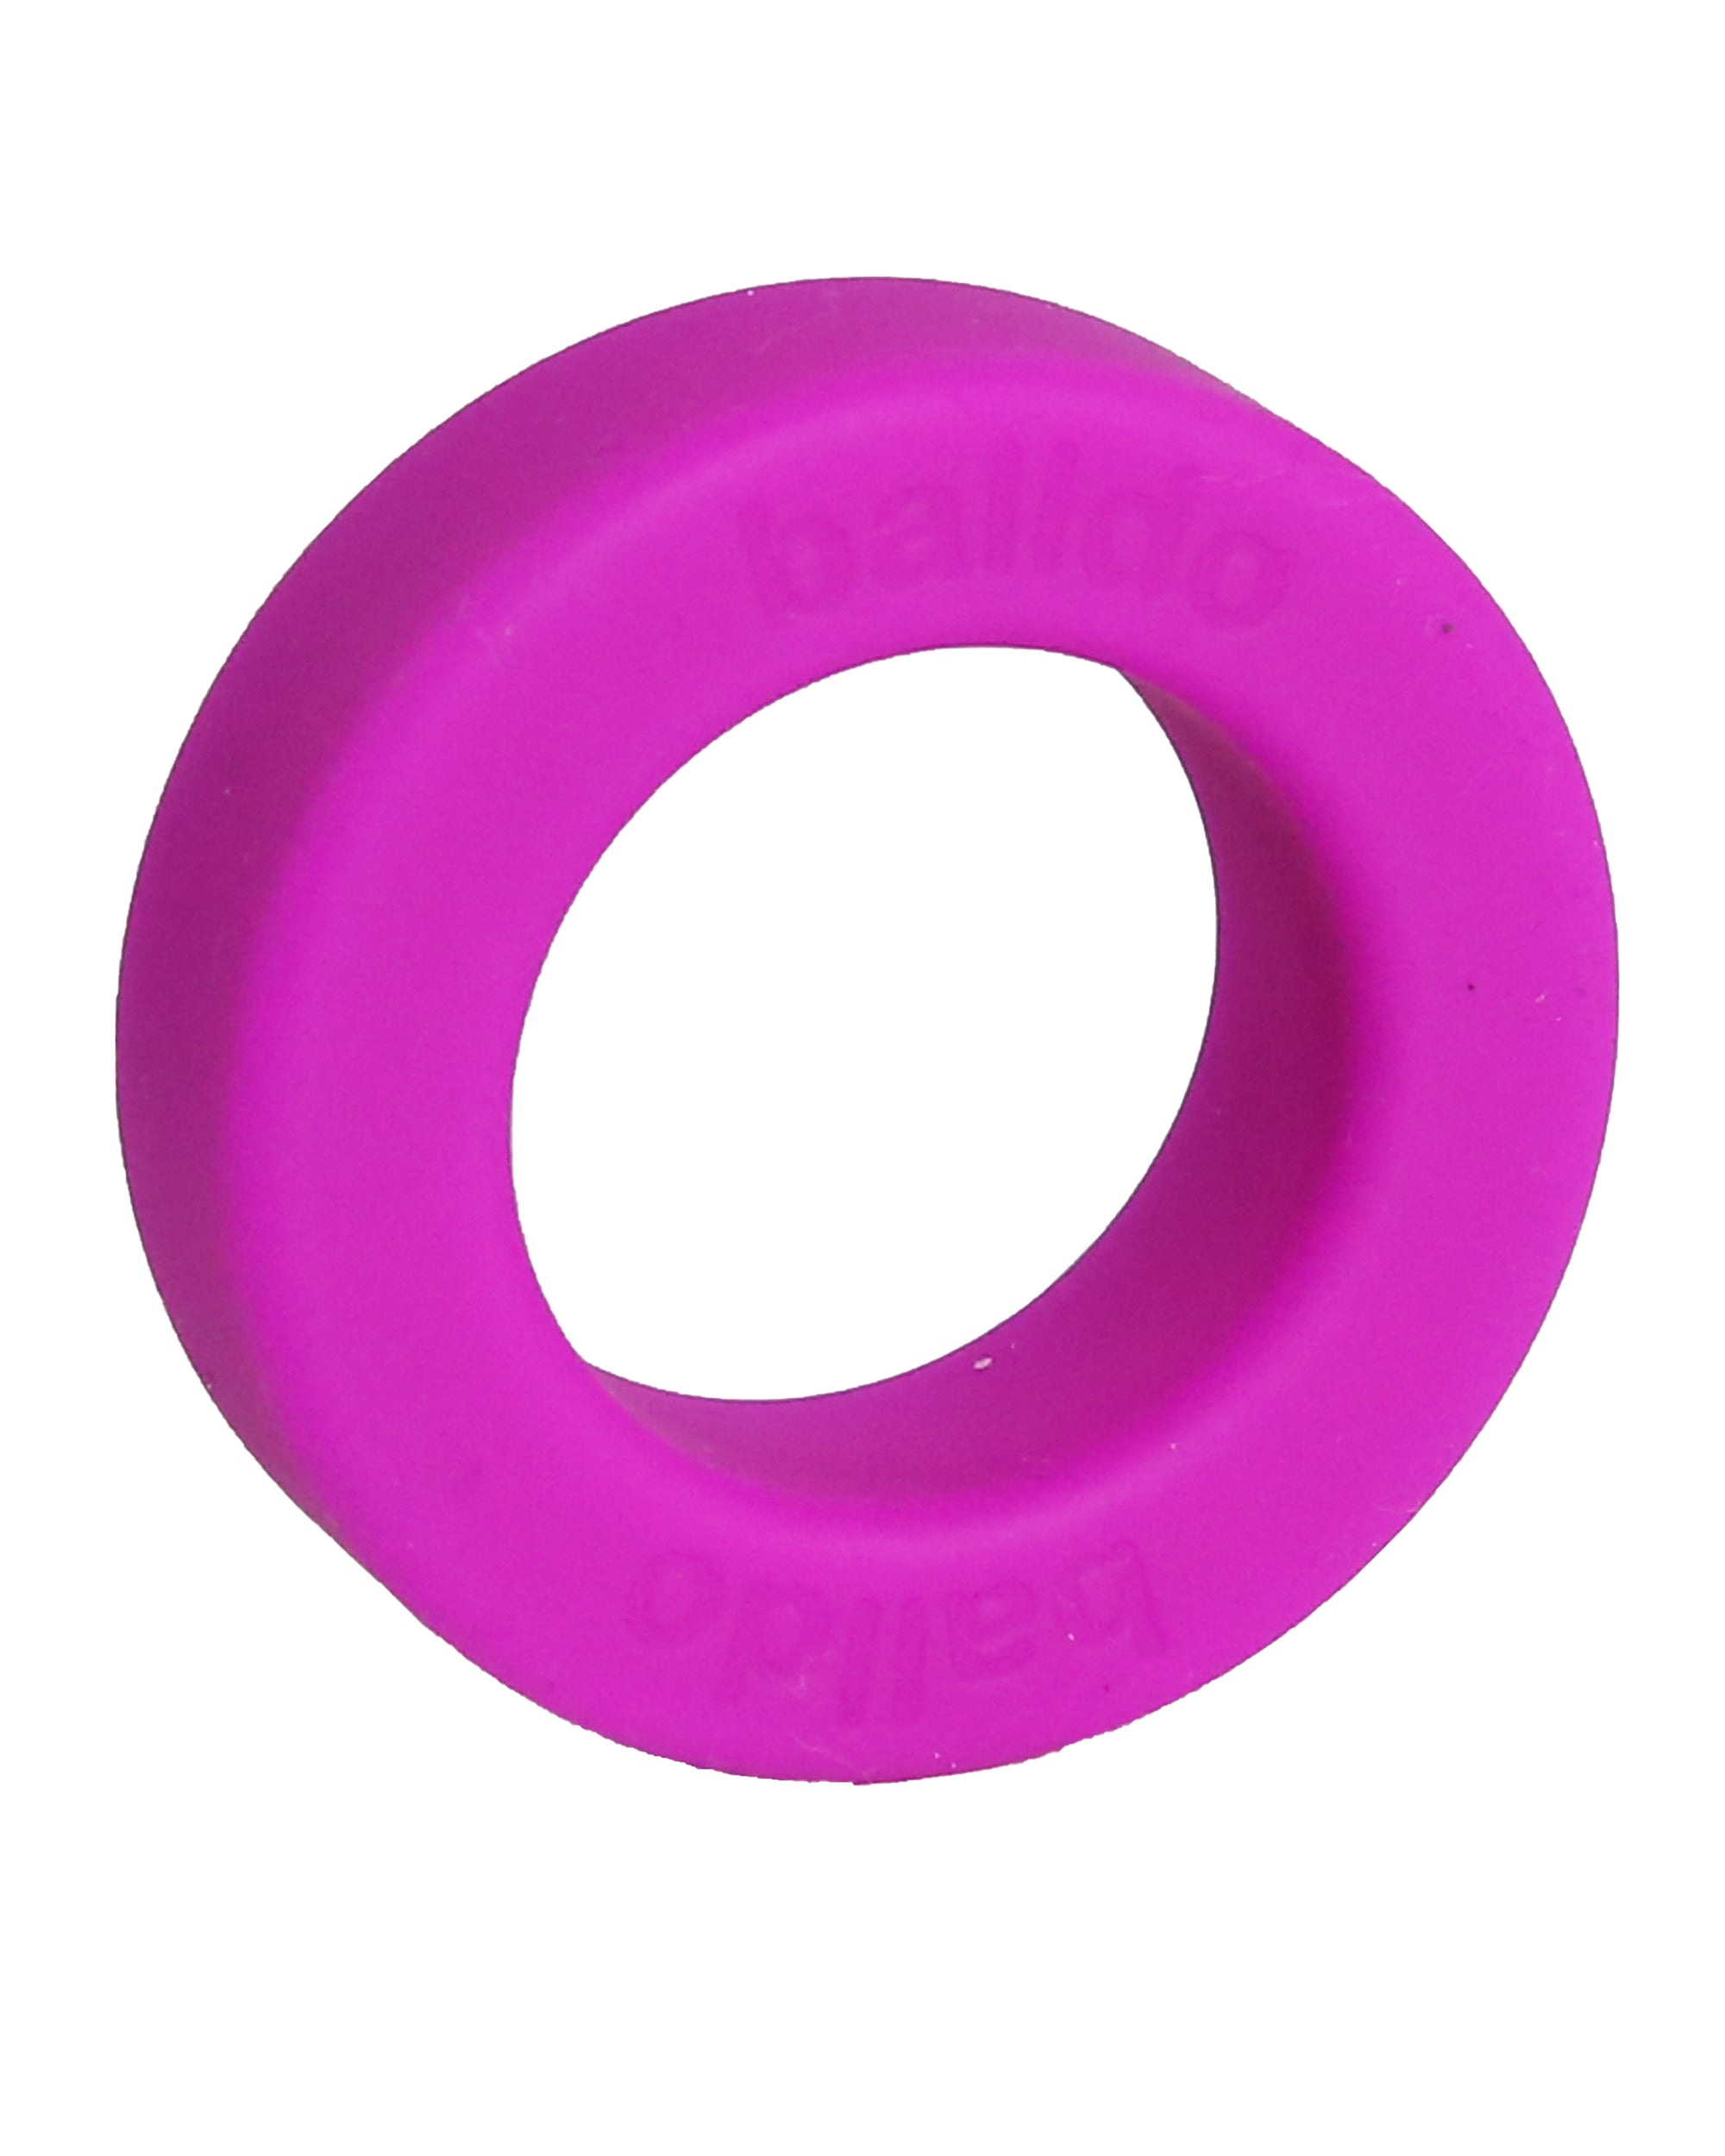 Single Spacer Ring Purple